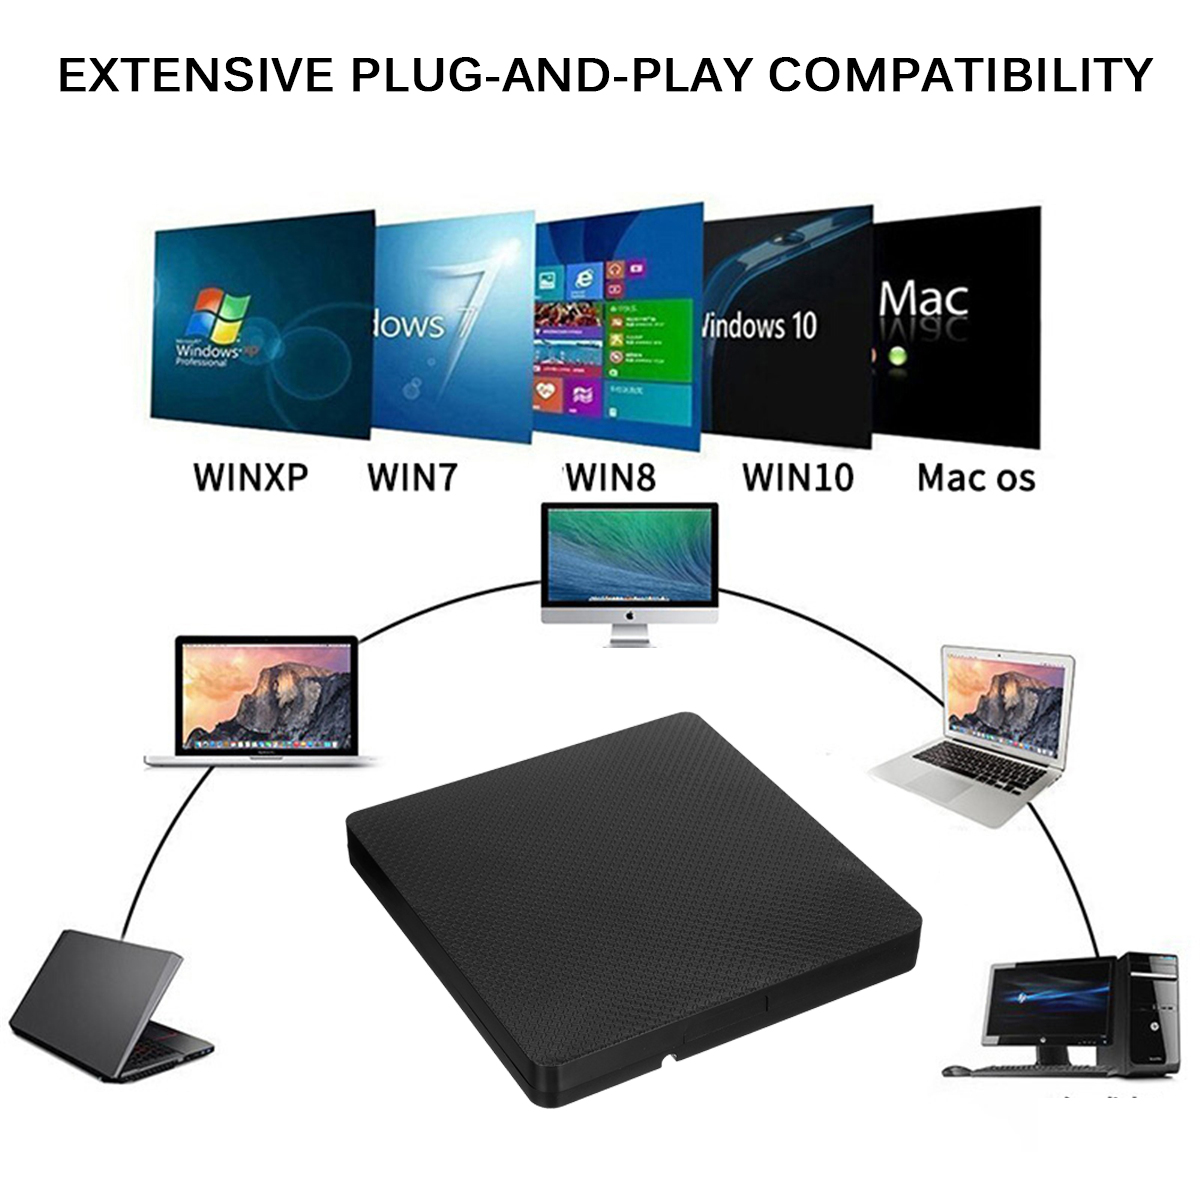 USB-30-Type-C-External-Optical-Drive-DVD-RW-Player-CD-DVD-Burner-Writer-Rewriter-Data-Transfer-for-P-1753035-2